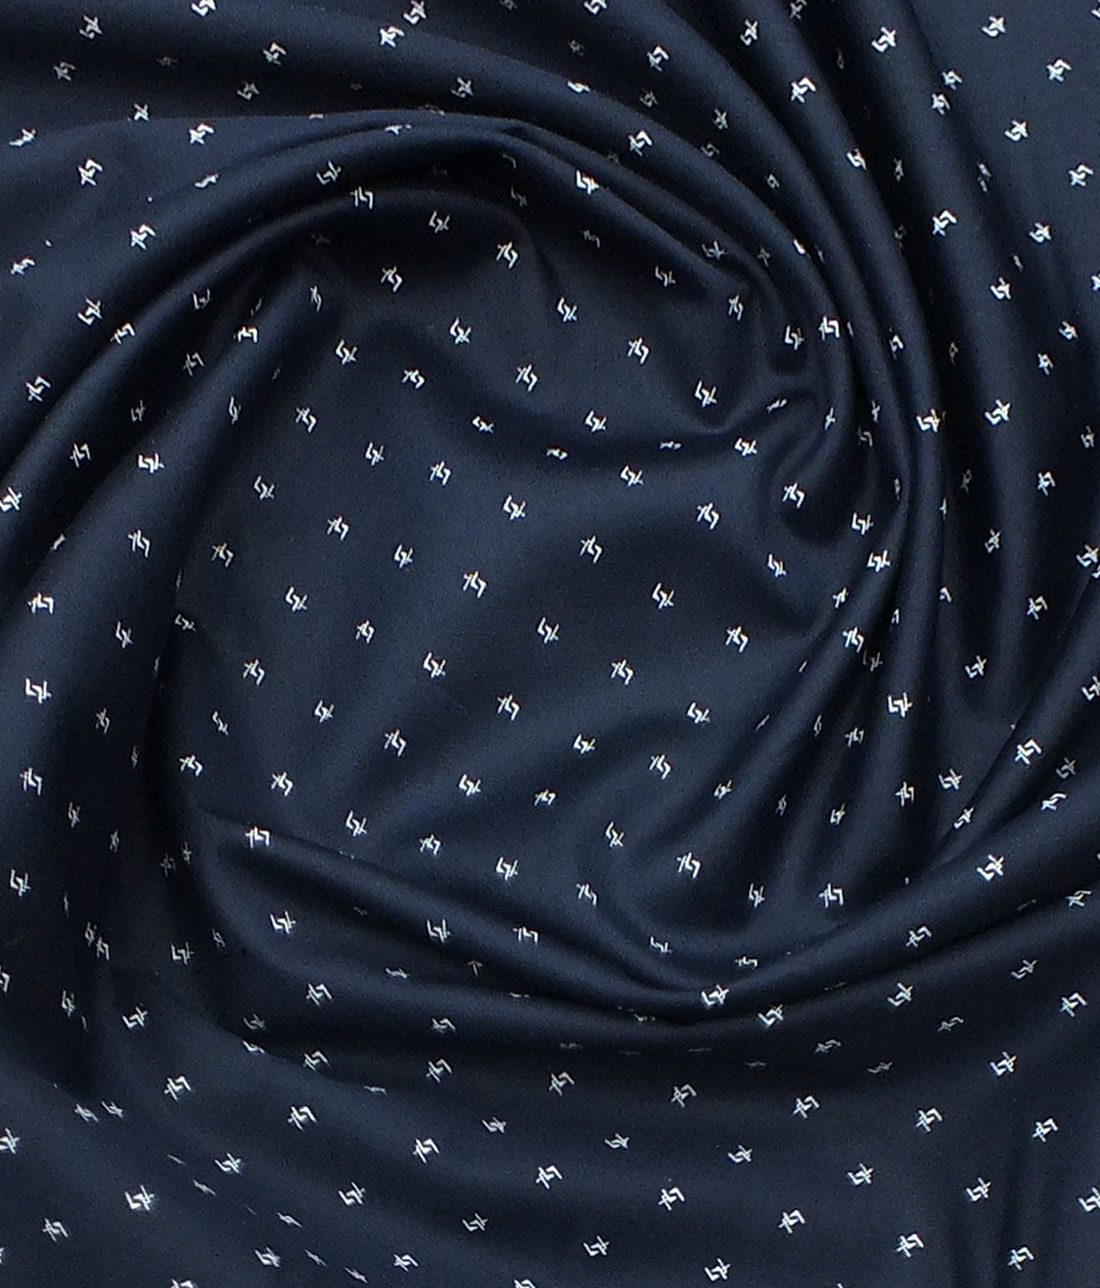 Cadini by Siyaram's Men's Dark Blue & White Floral Cotton Printed Shirt Fabric